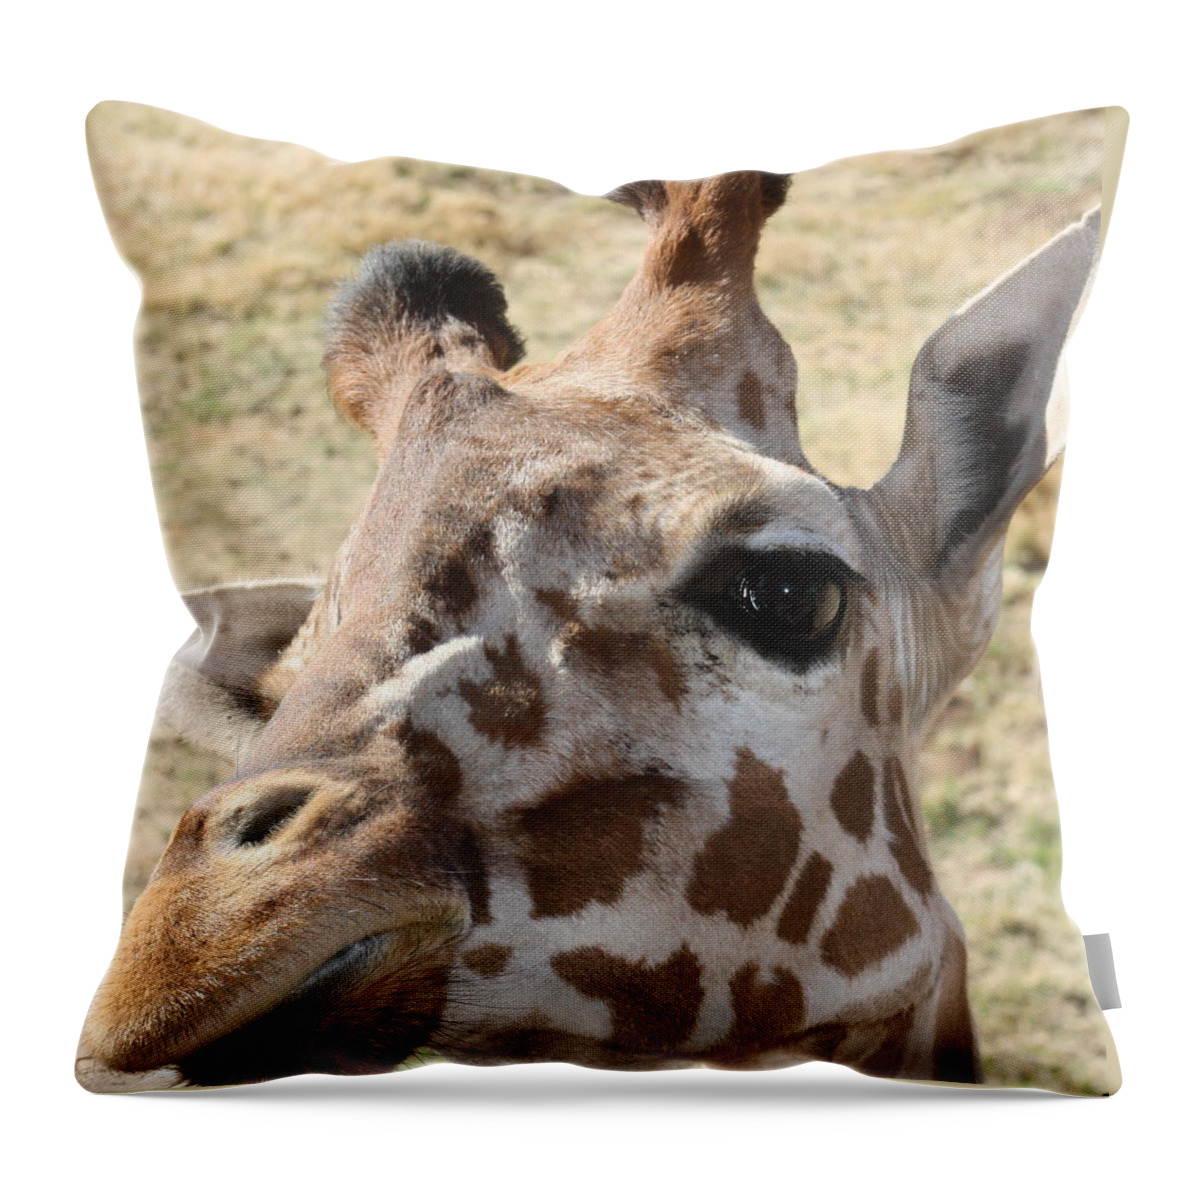 Giraffe Throw Pillow featuring the photograph I see you by Kim Galluzzo Wozniak